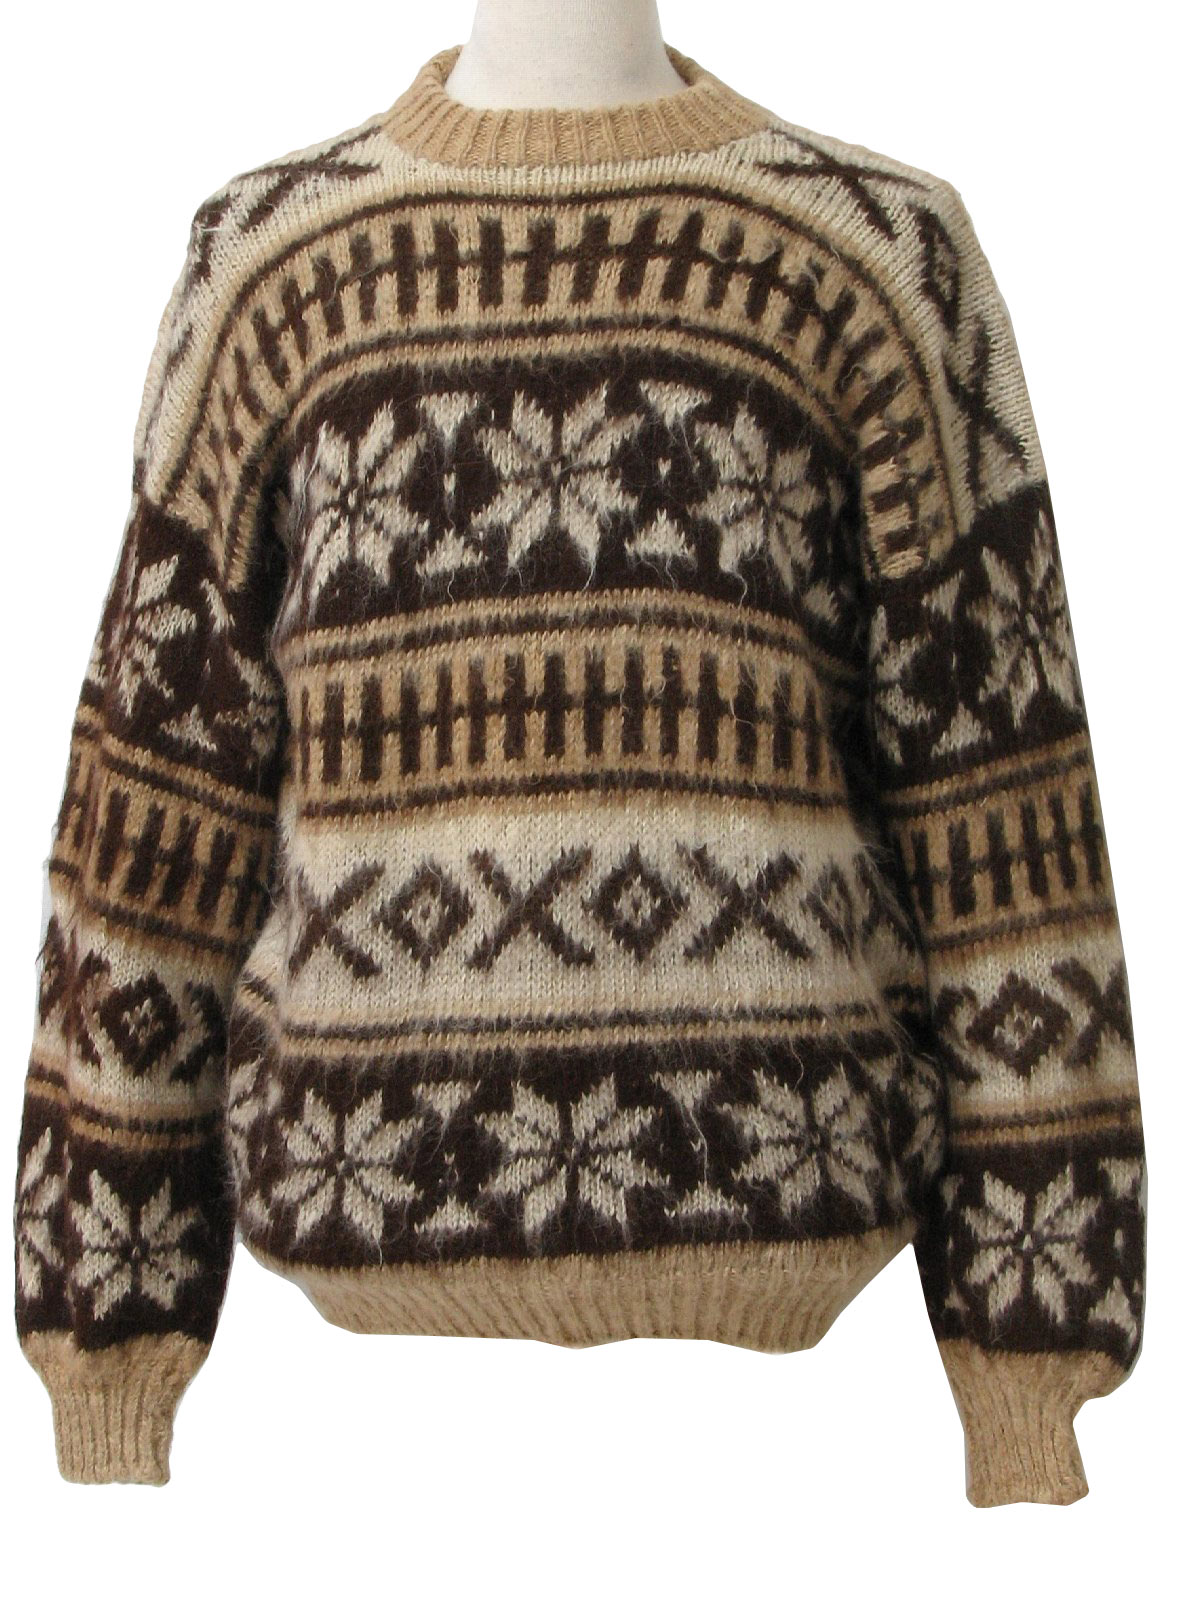 Retro 1980's Sweater (Casa) : 80s -Casa- Mens handknit, tan, dark brown ...